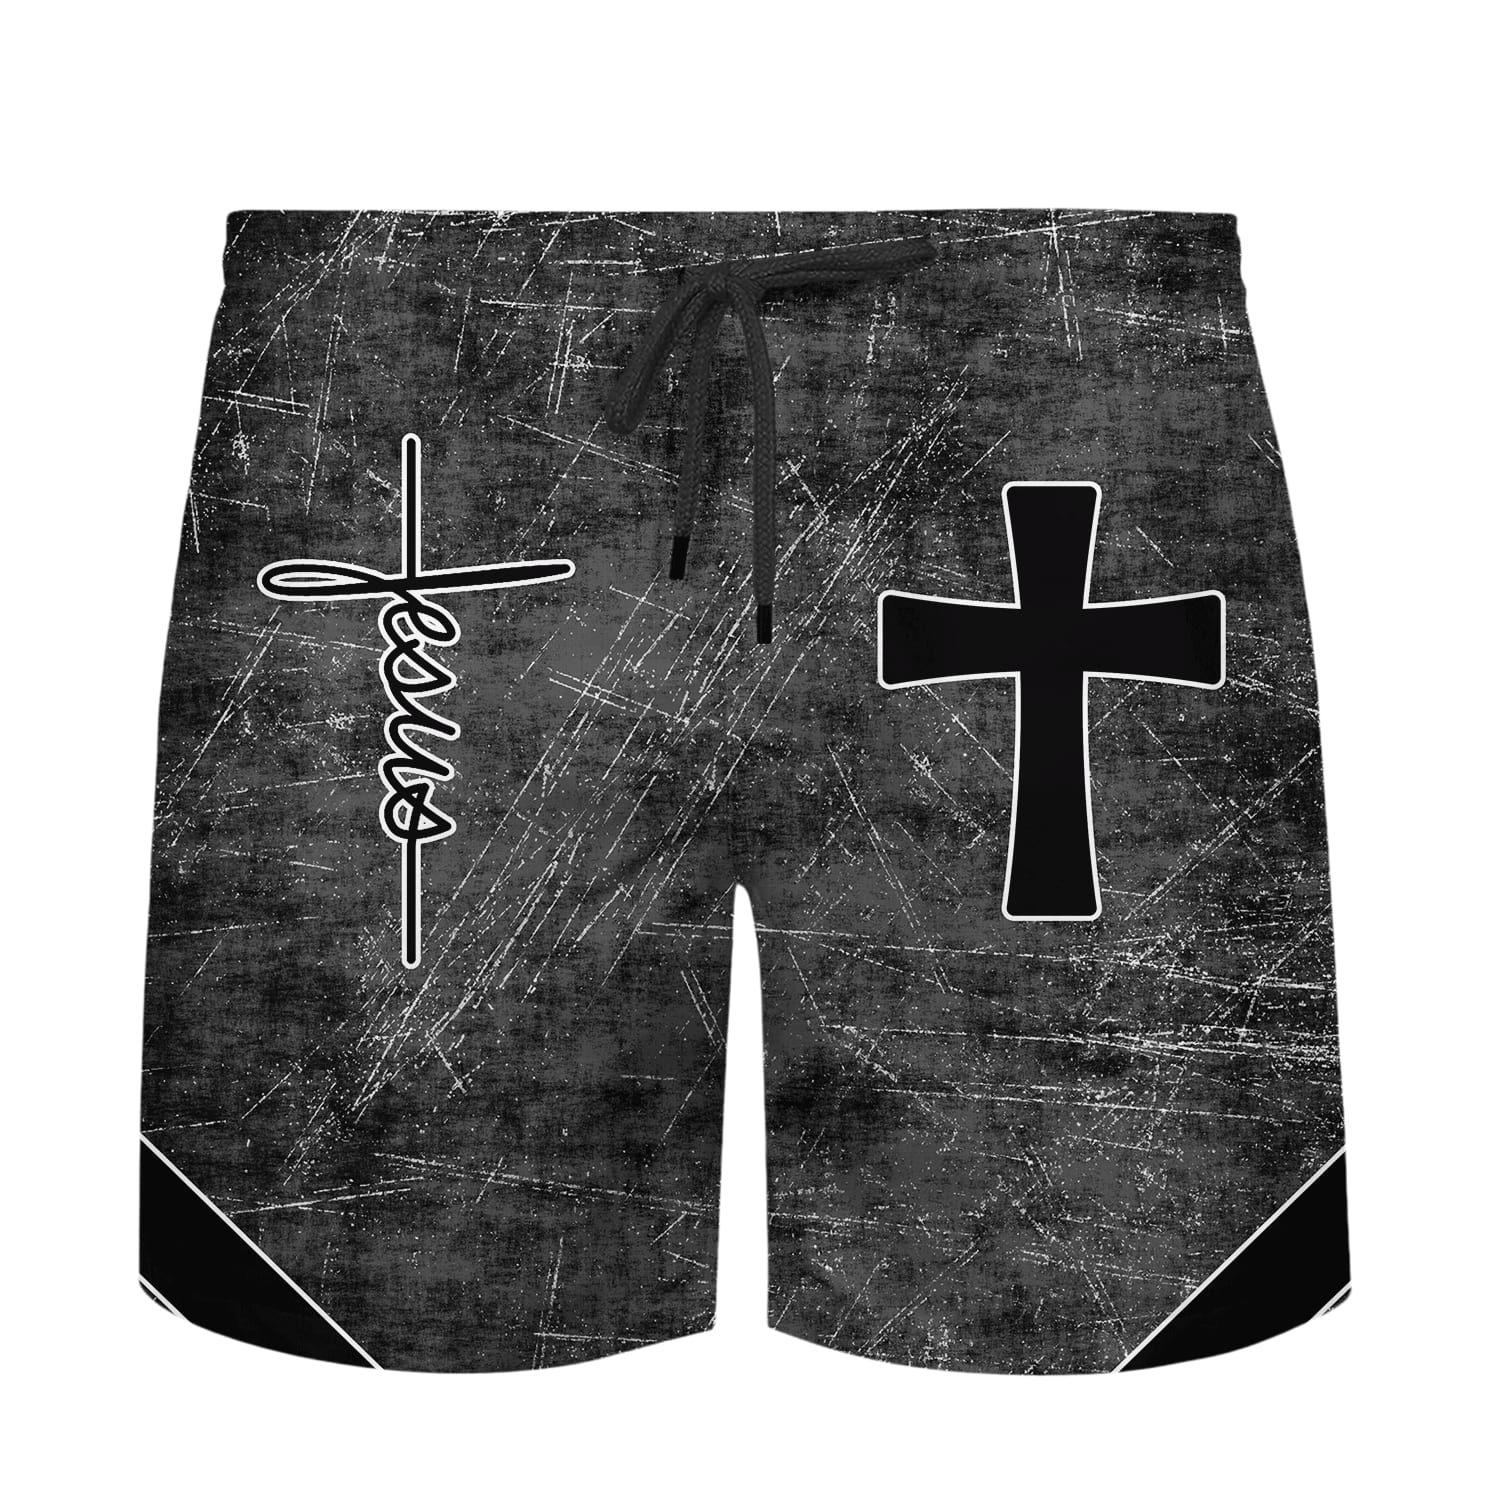 American Eagle One Under God Polo Shirt - Christian Shirts & Shorts